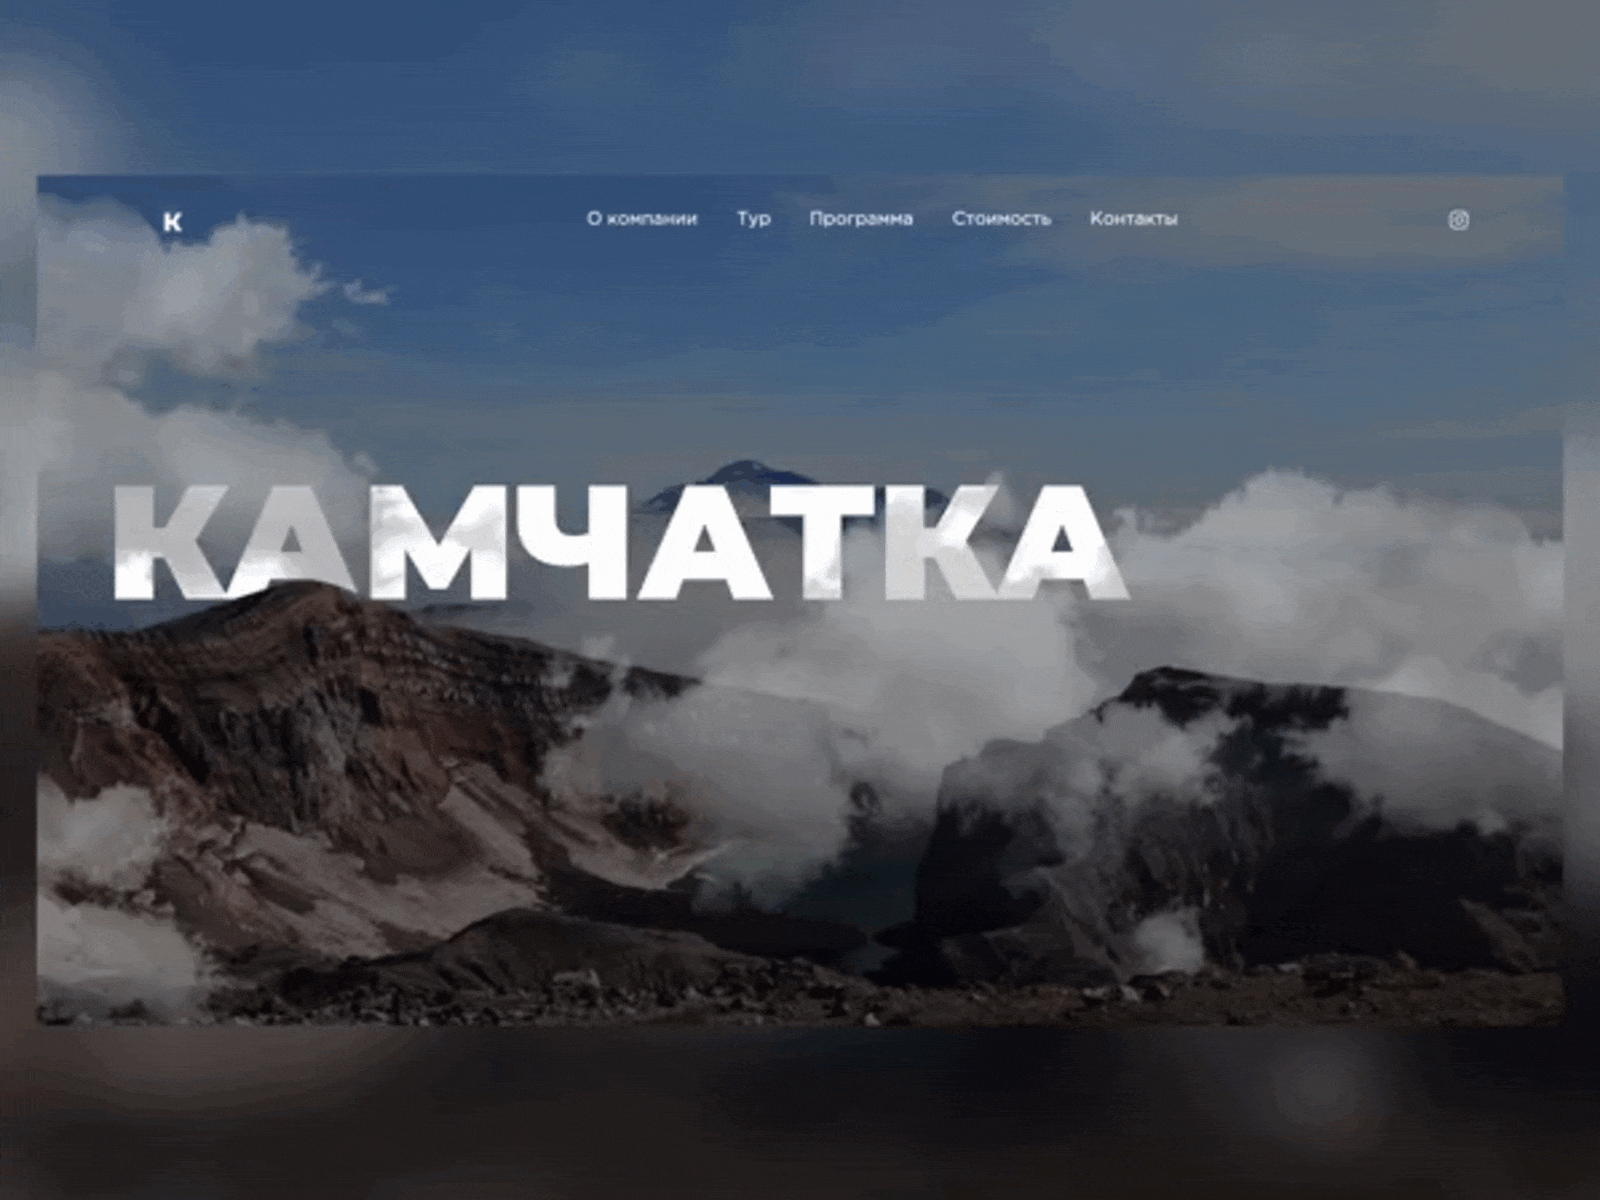 Kamchatka travel agency landing page figma landing page travel web design web design webdesign веб дизайн веб дизайн